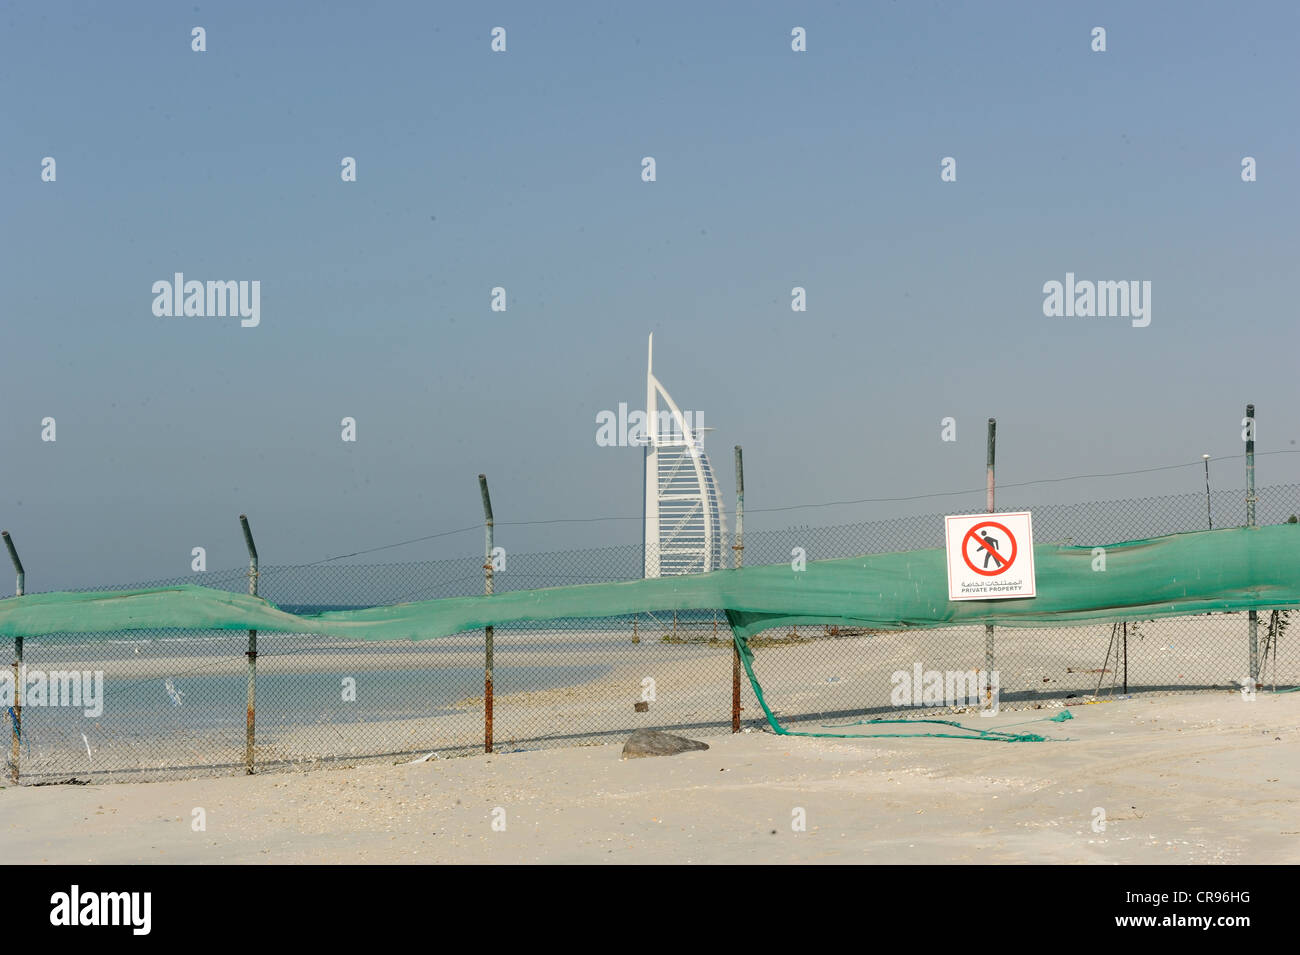 No Trespassing, sign with fencing, Burj al Arab, Tower of the Arabs, hotel, landmark, Jumeirah Group, United Arab Emirates Stock Photo